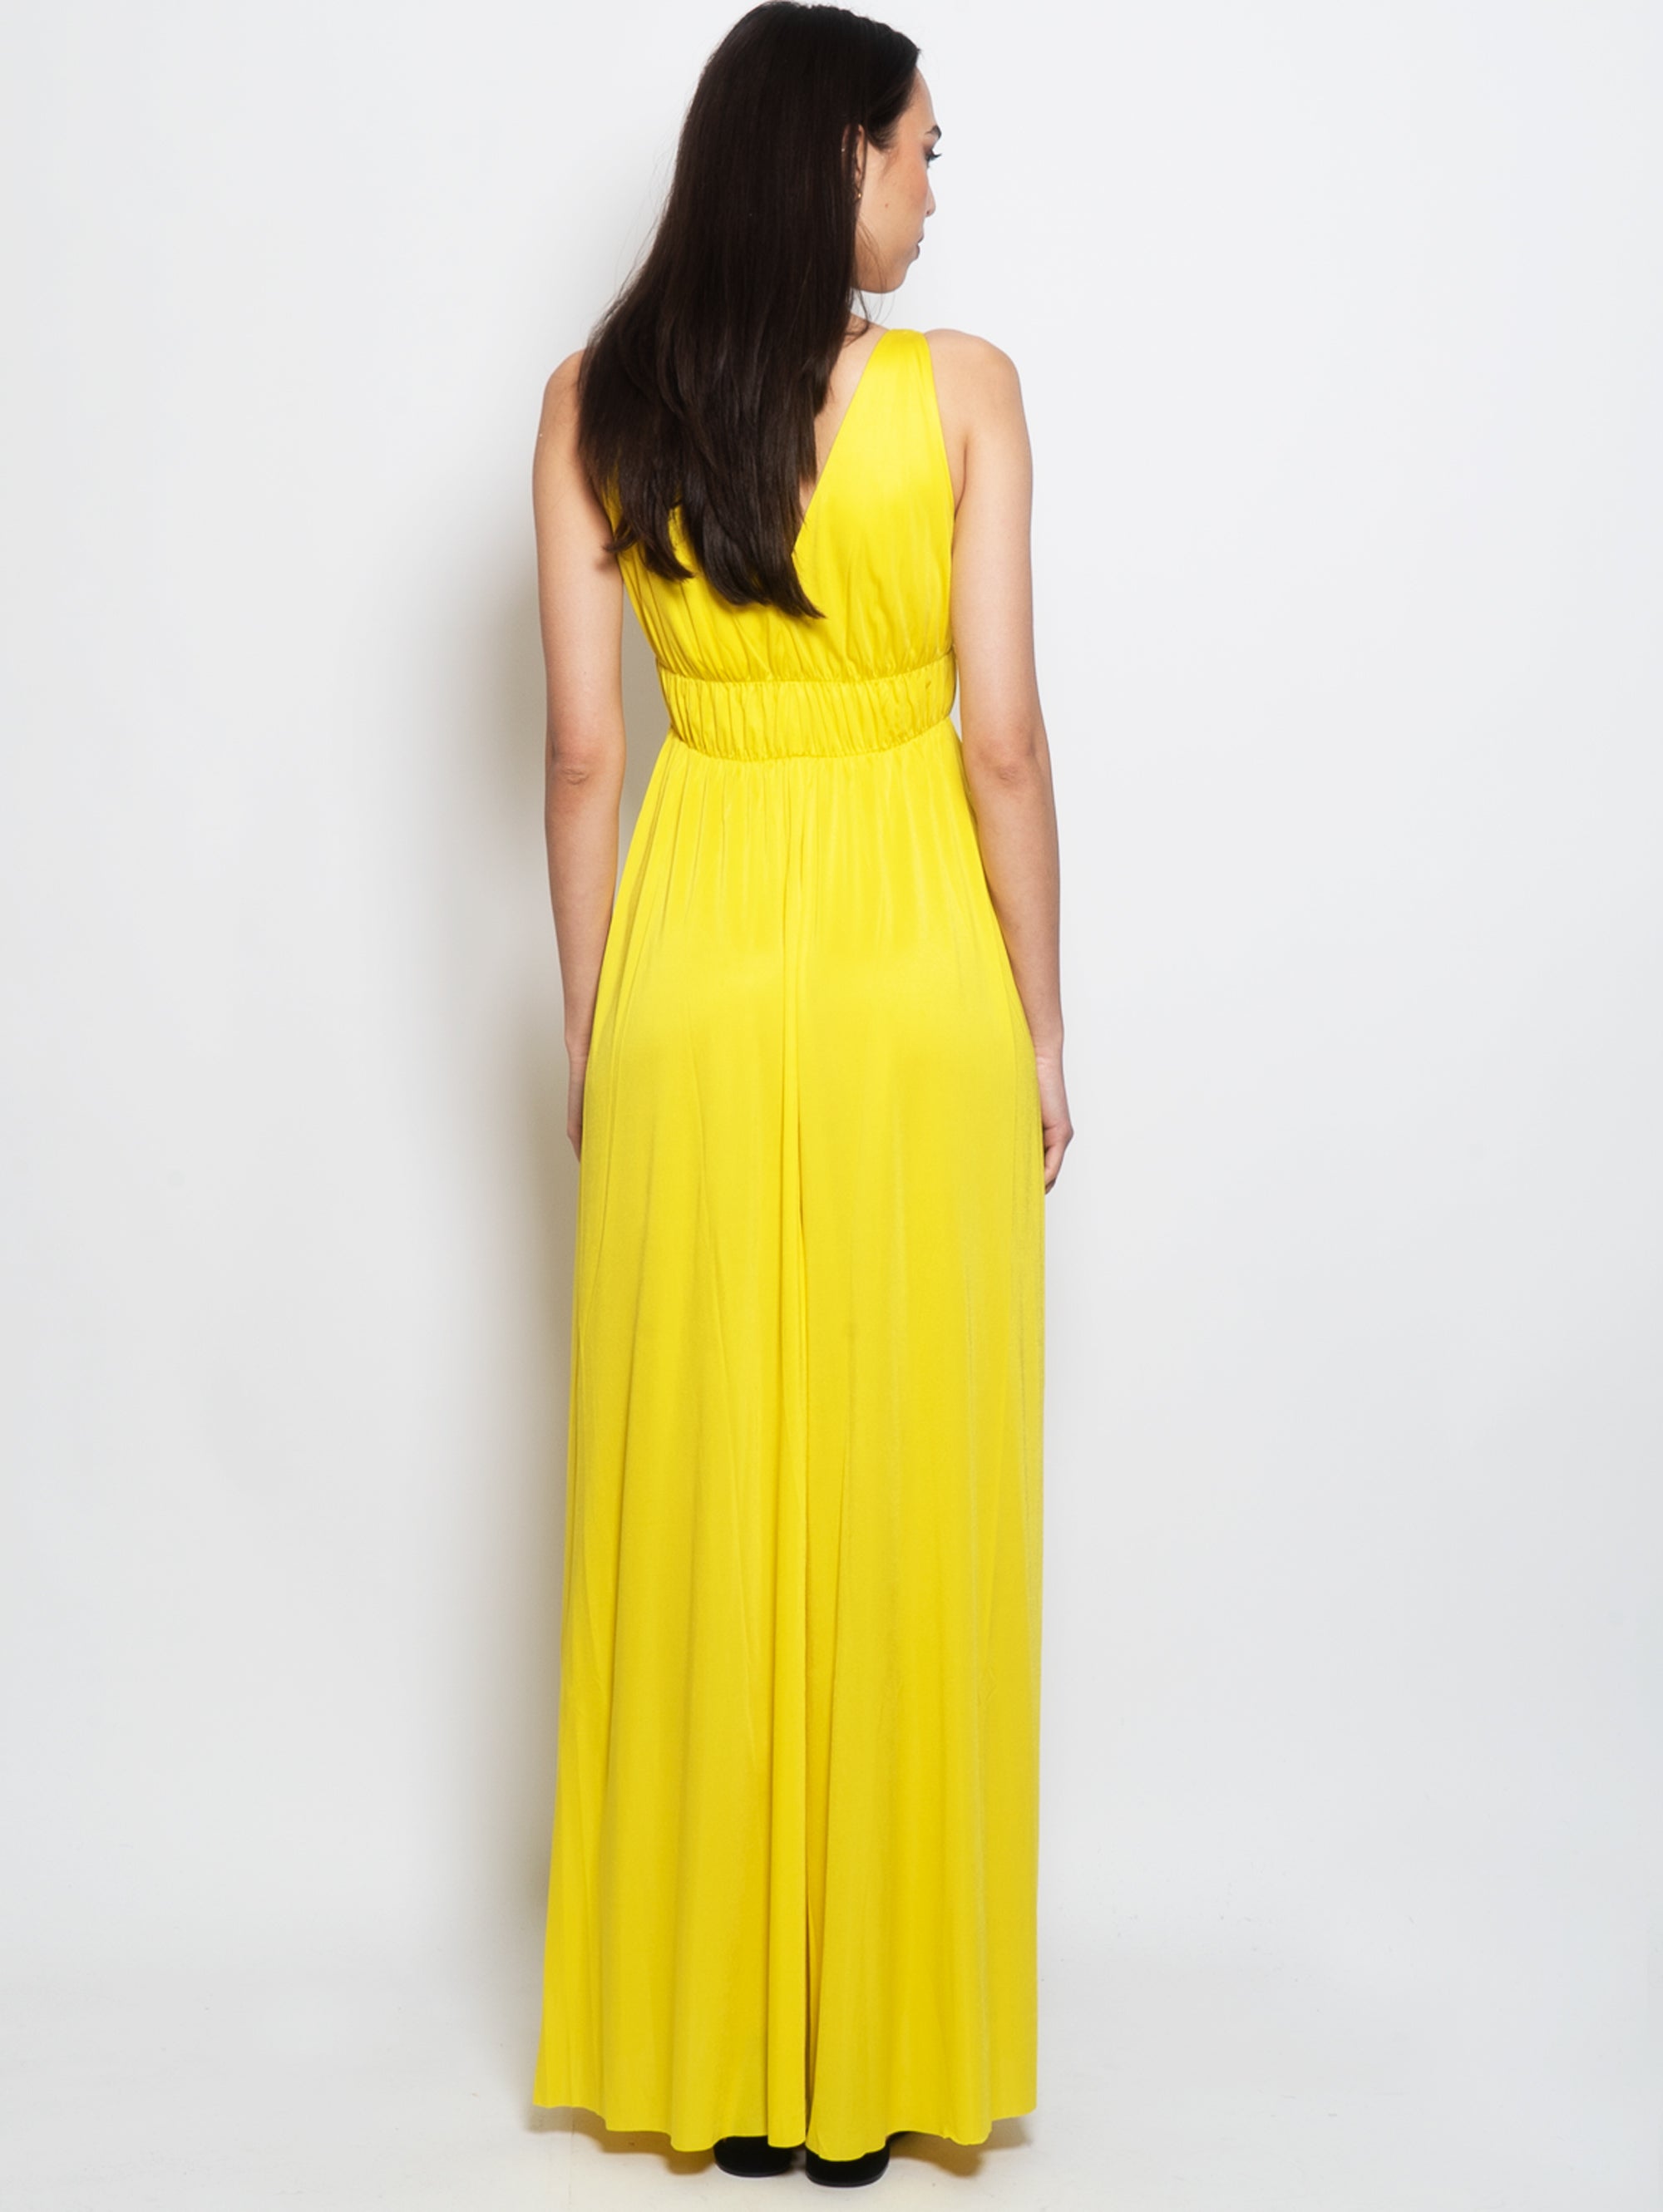 Long Yellow Empire Style Dress